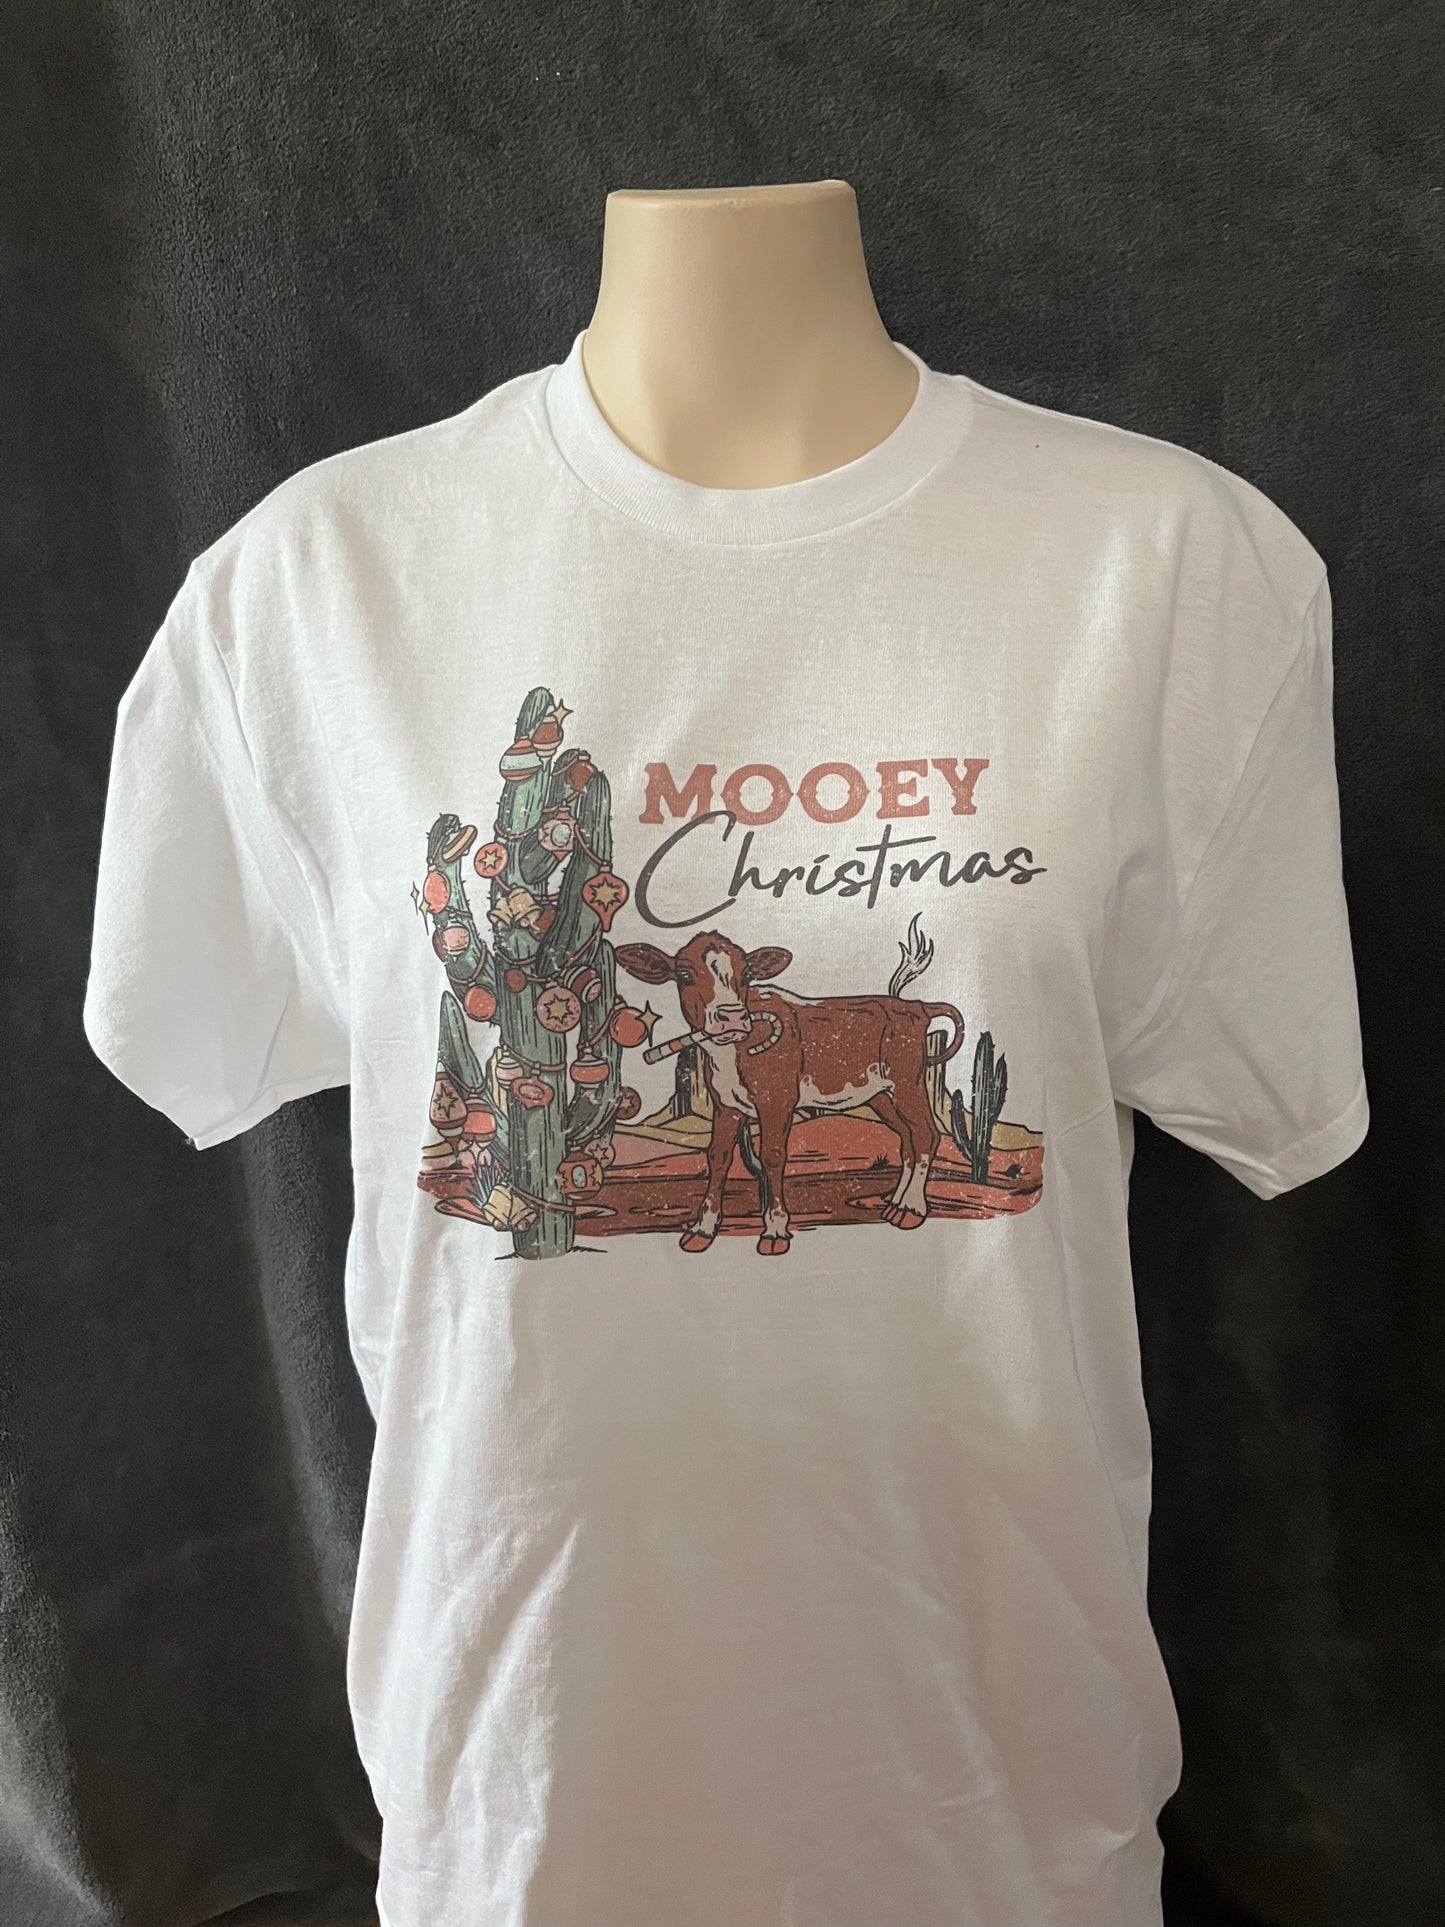 Mooey Christmas Graphic T-shirt